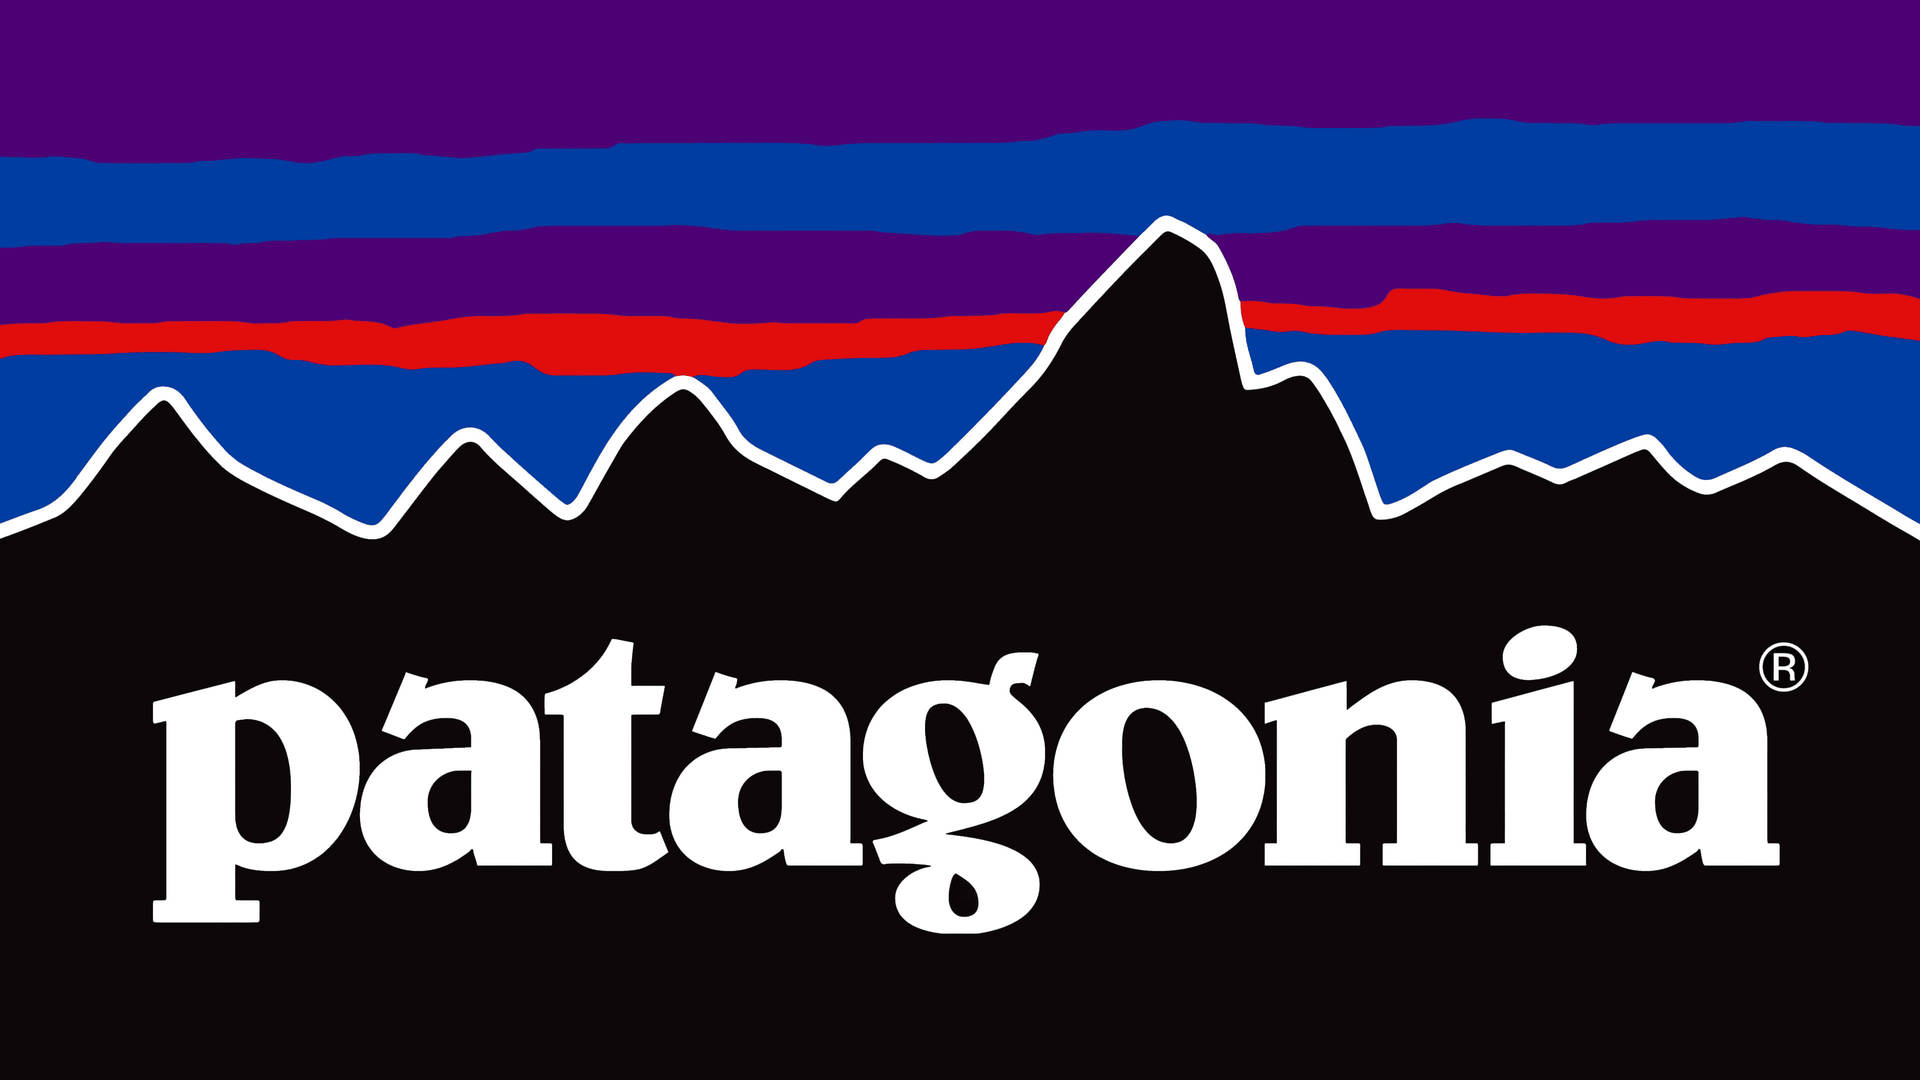 Endless Winter  exploreeverywhere always this  Patagonia Iphone  wallpaper Patagonia logo